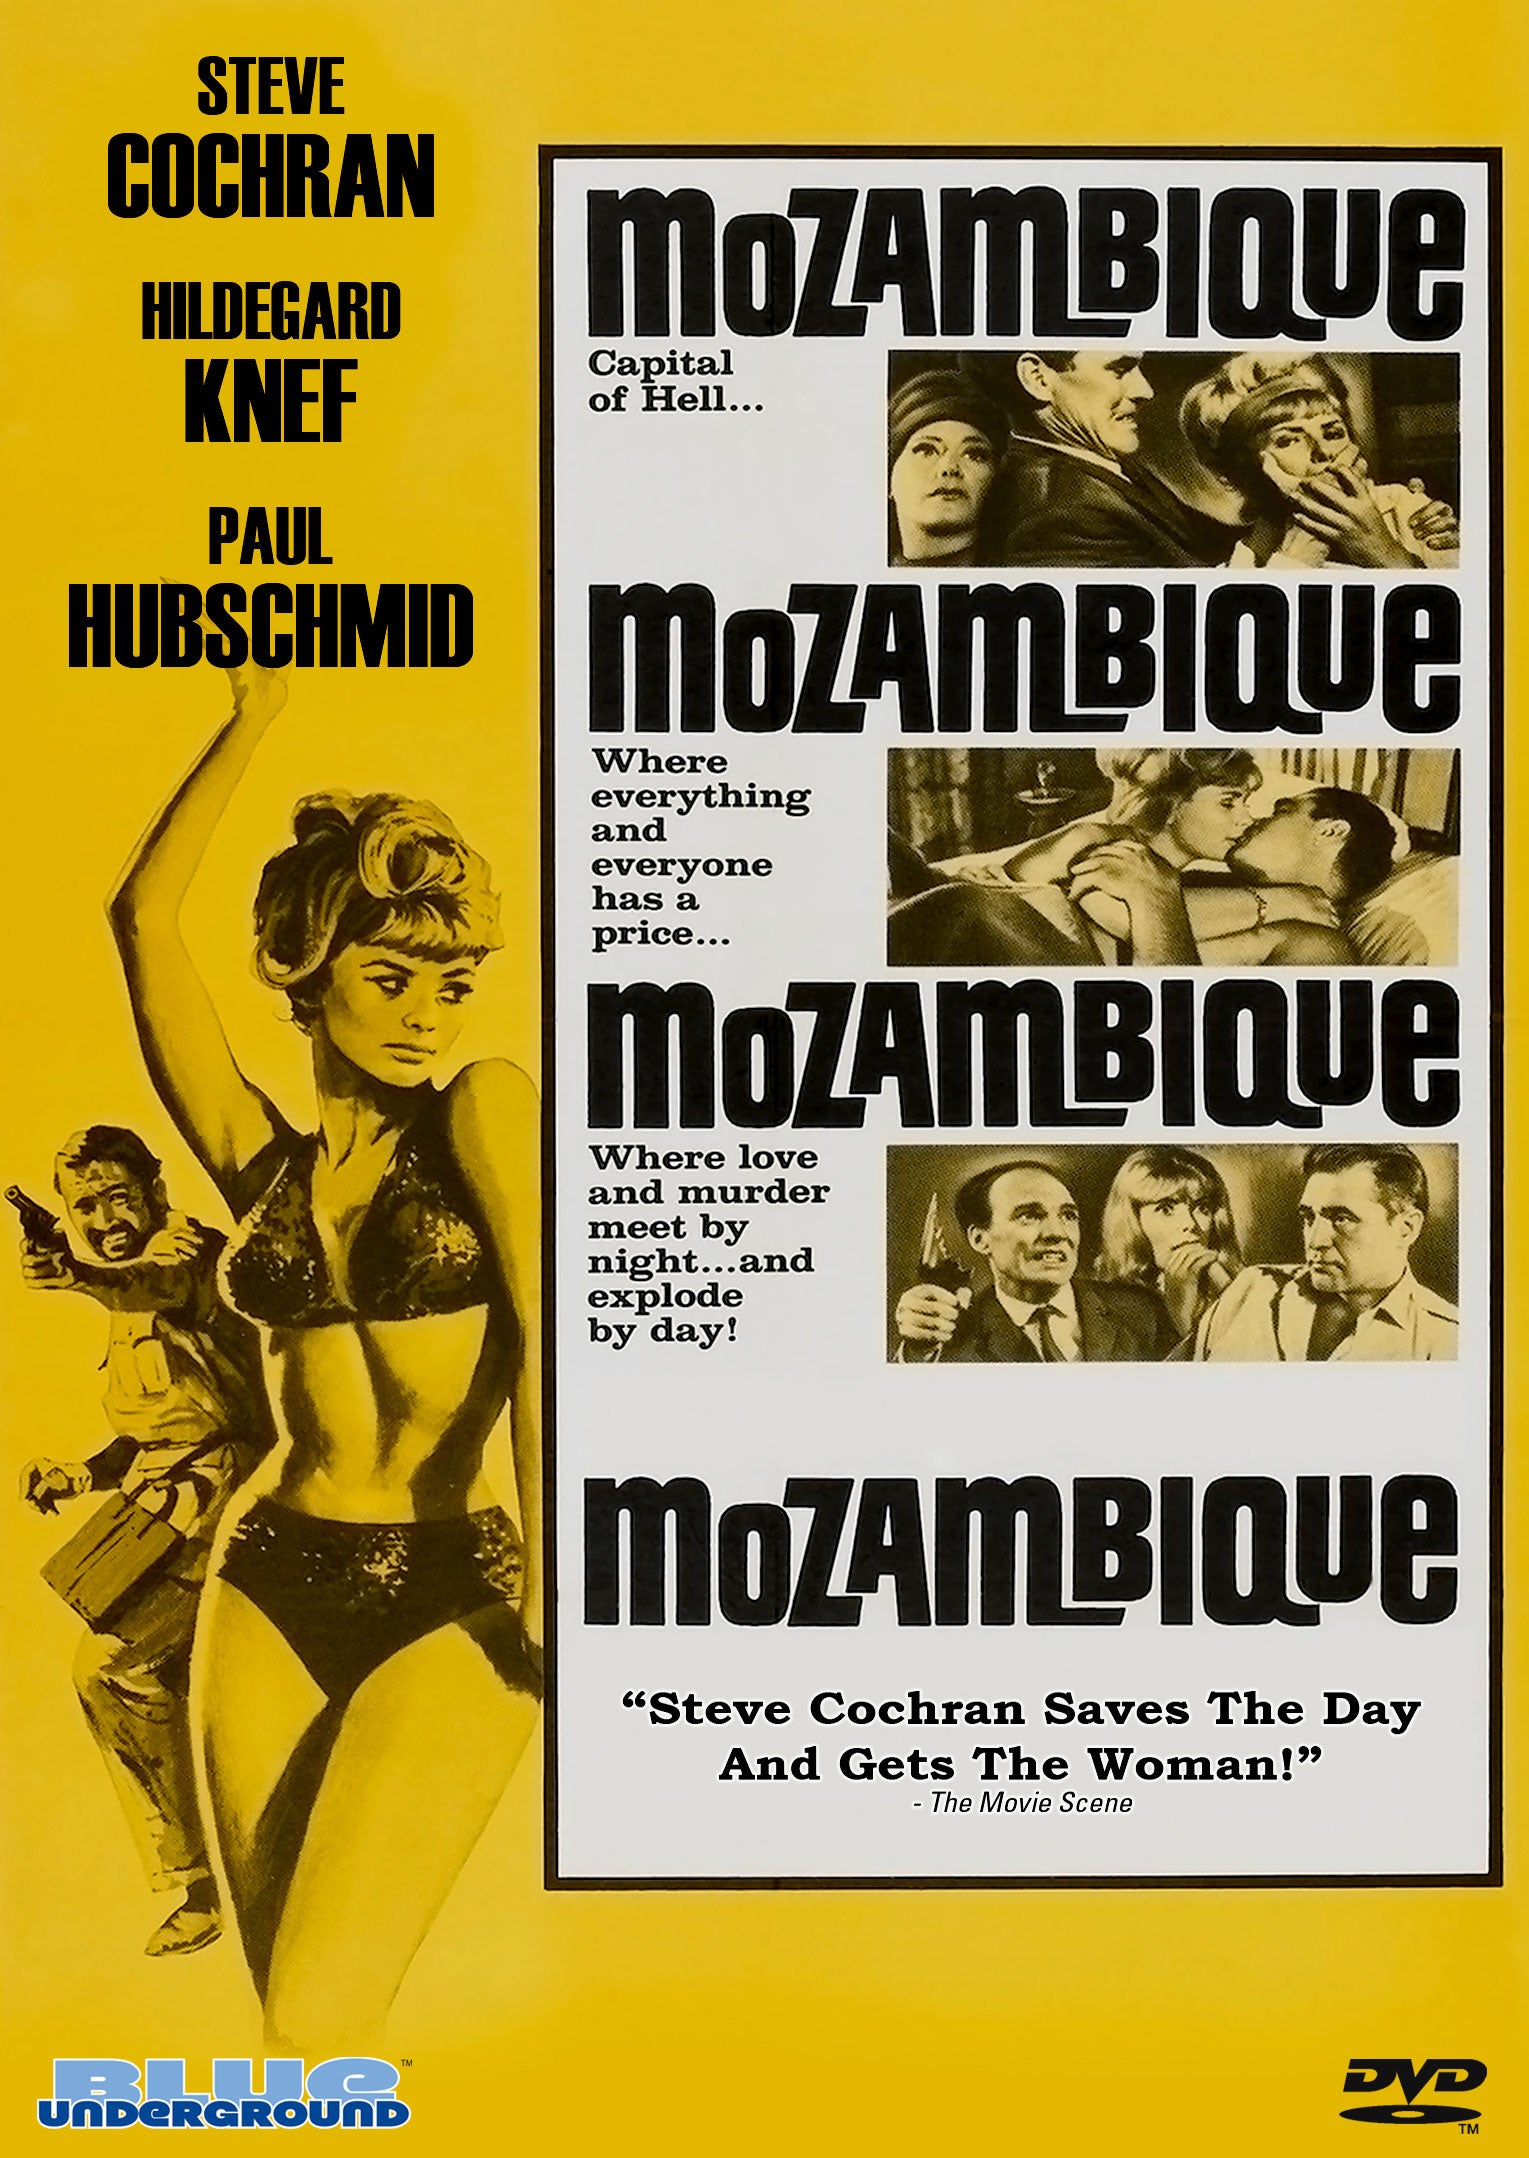 MOZAMBIQUE DVD